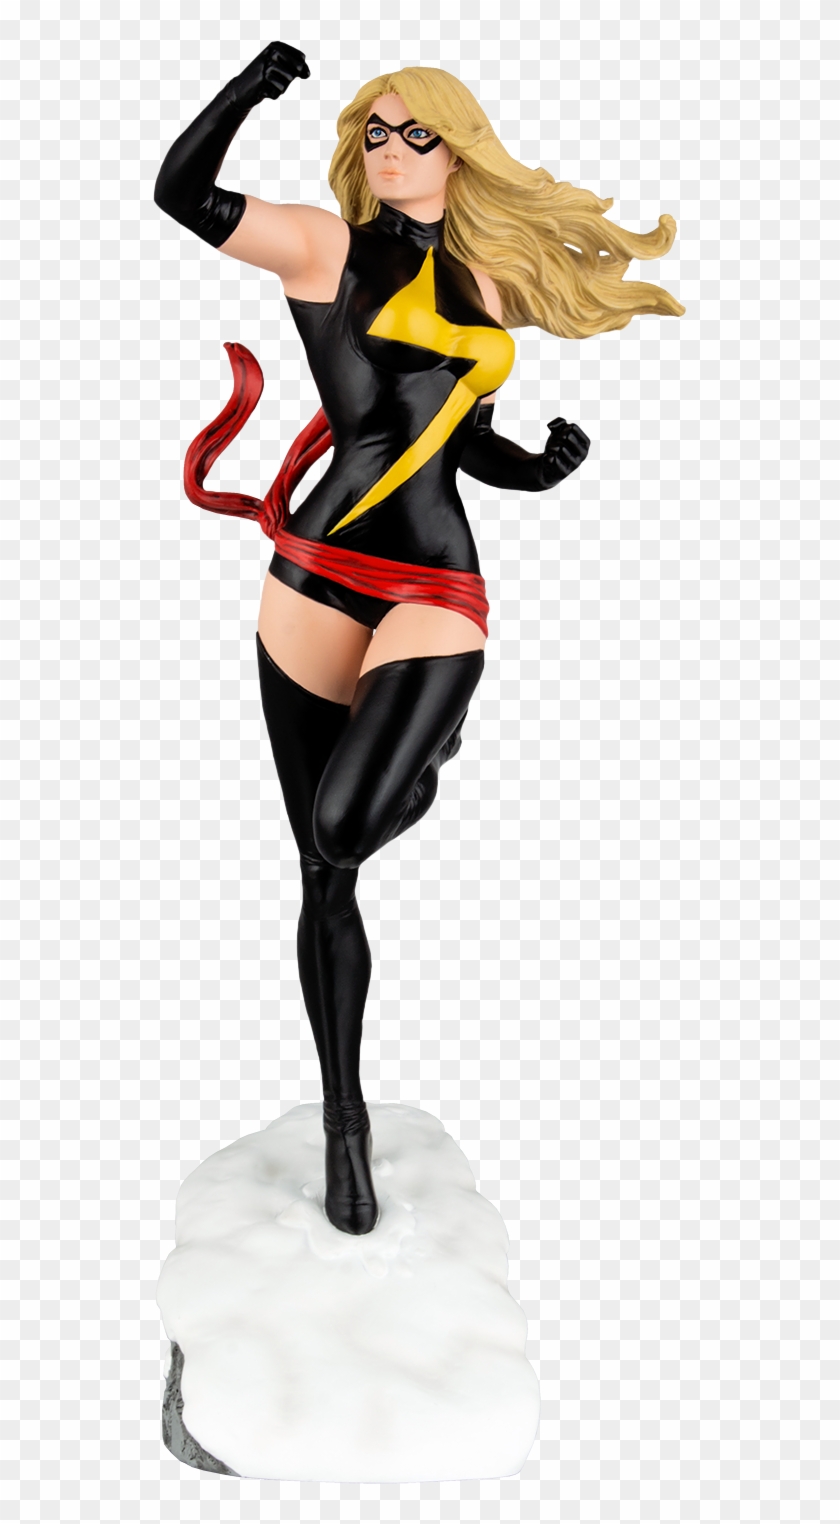 The - Carol Danvers Ms Marvel Statue Clipart #4902703